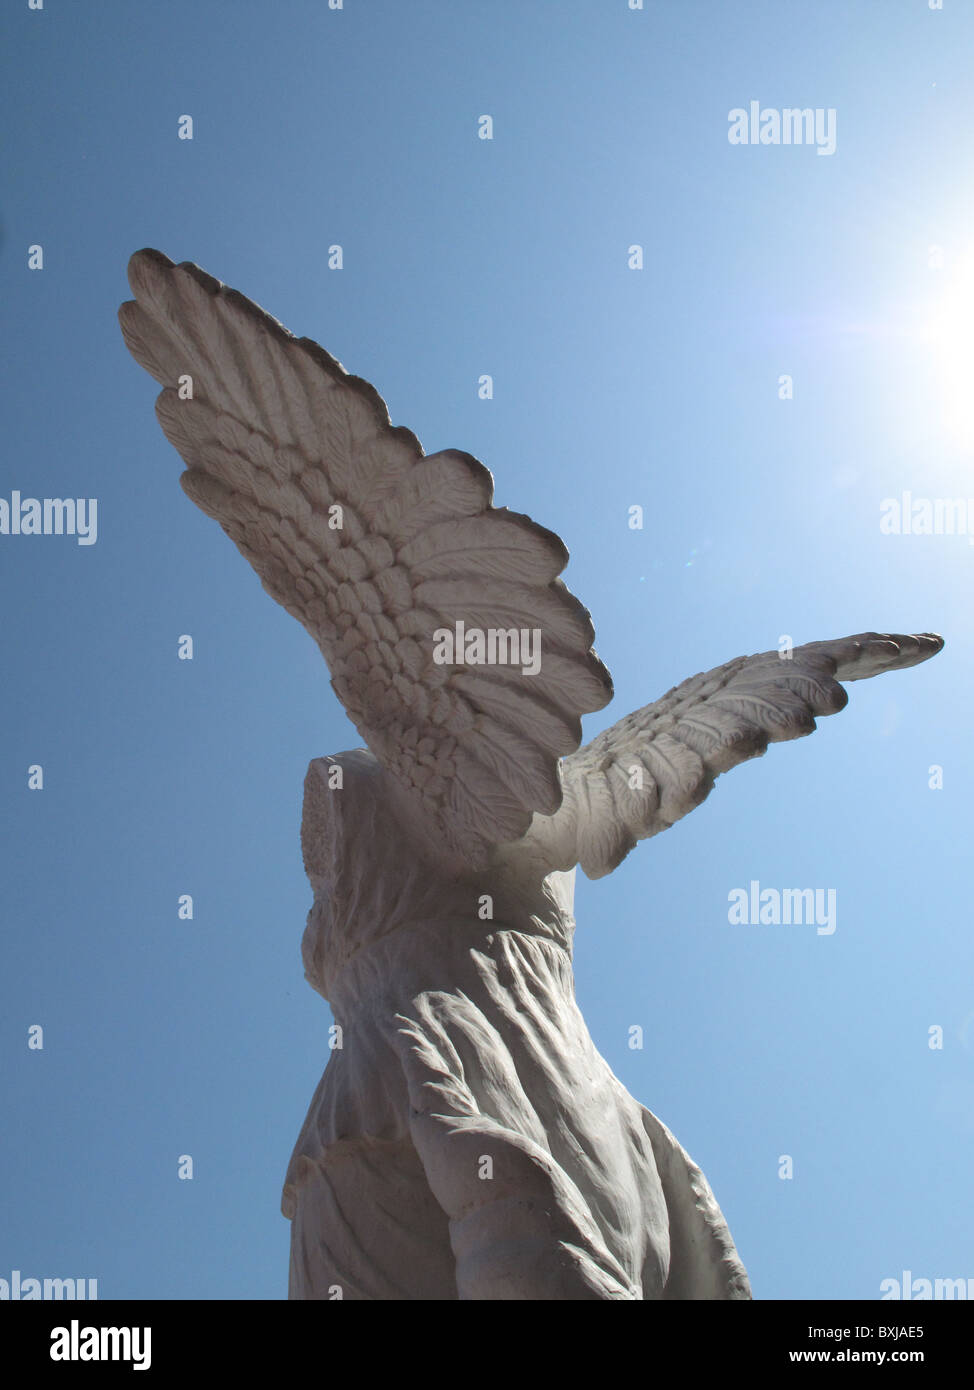 konkrete Steinfigur Engel gegen blauen Himmel Flare Sonne fliegen Skulptur Stockfoto